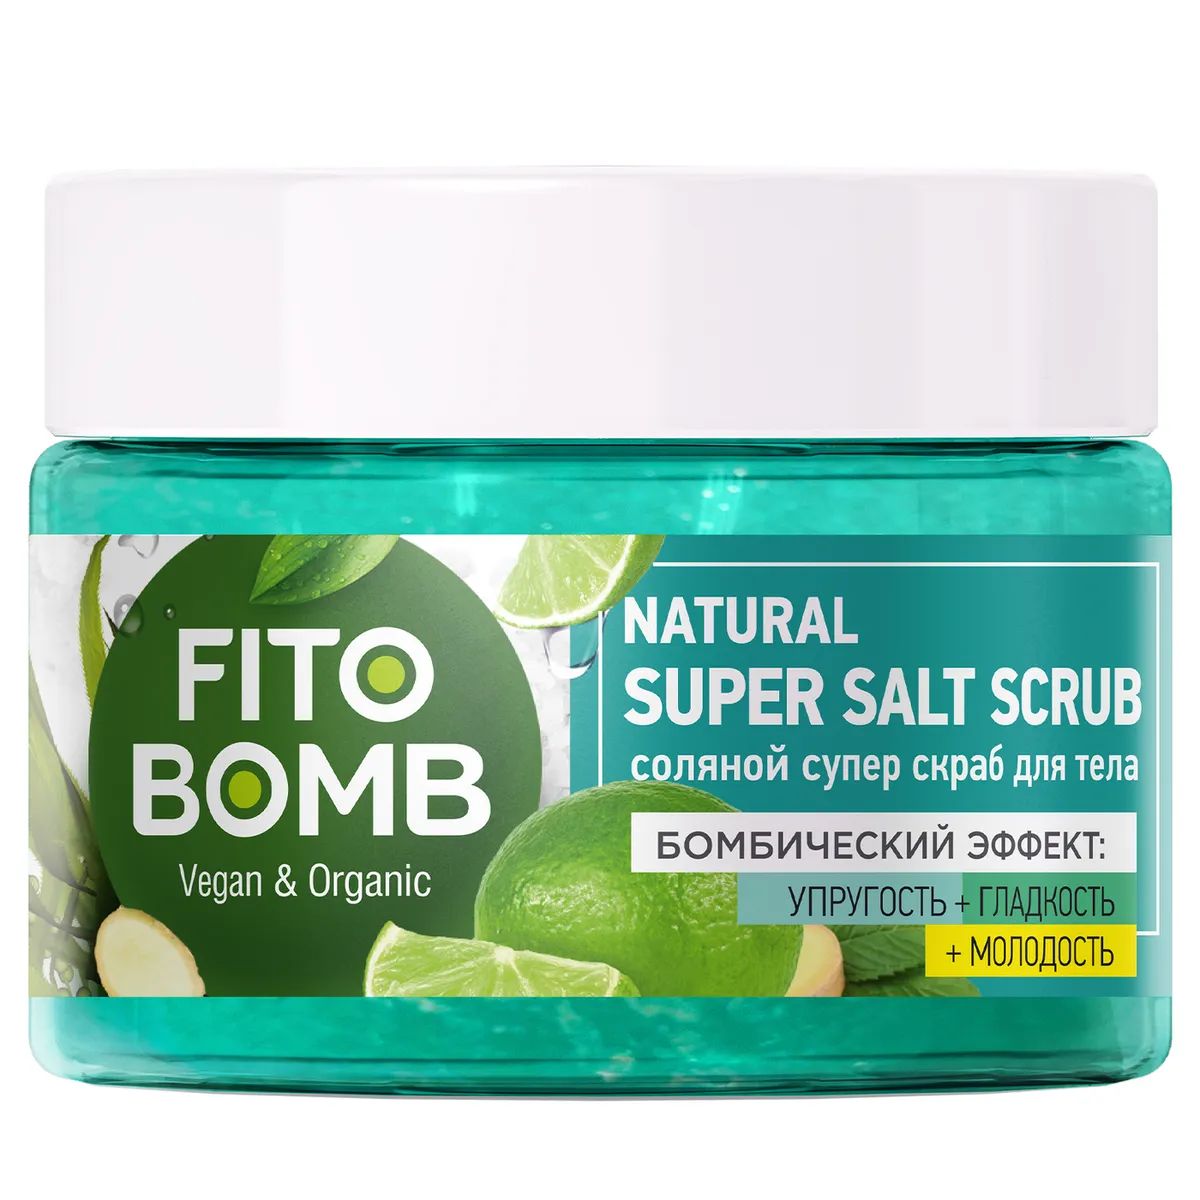 Супер соляной скраб для тела Fito bomb  250 мл